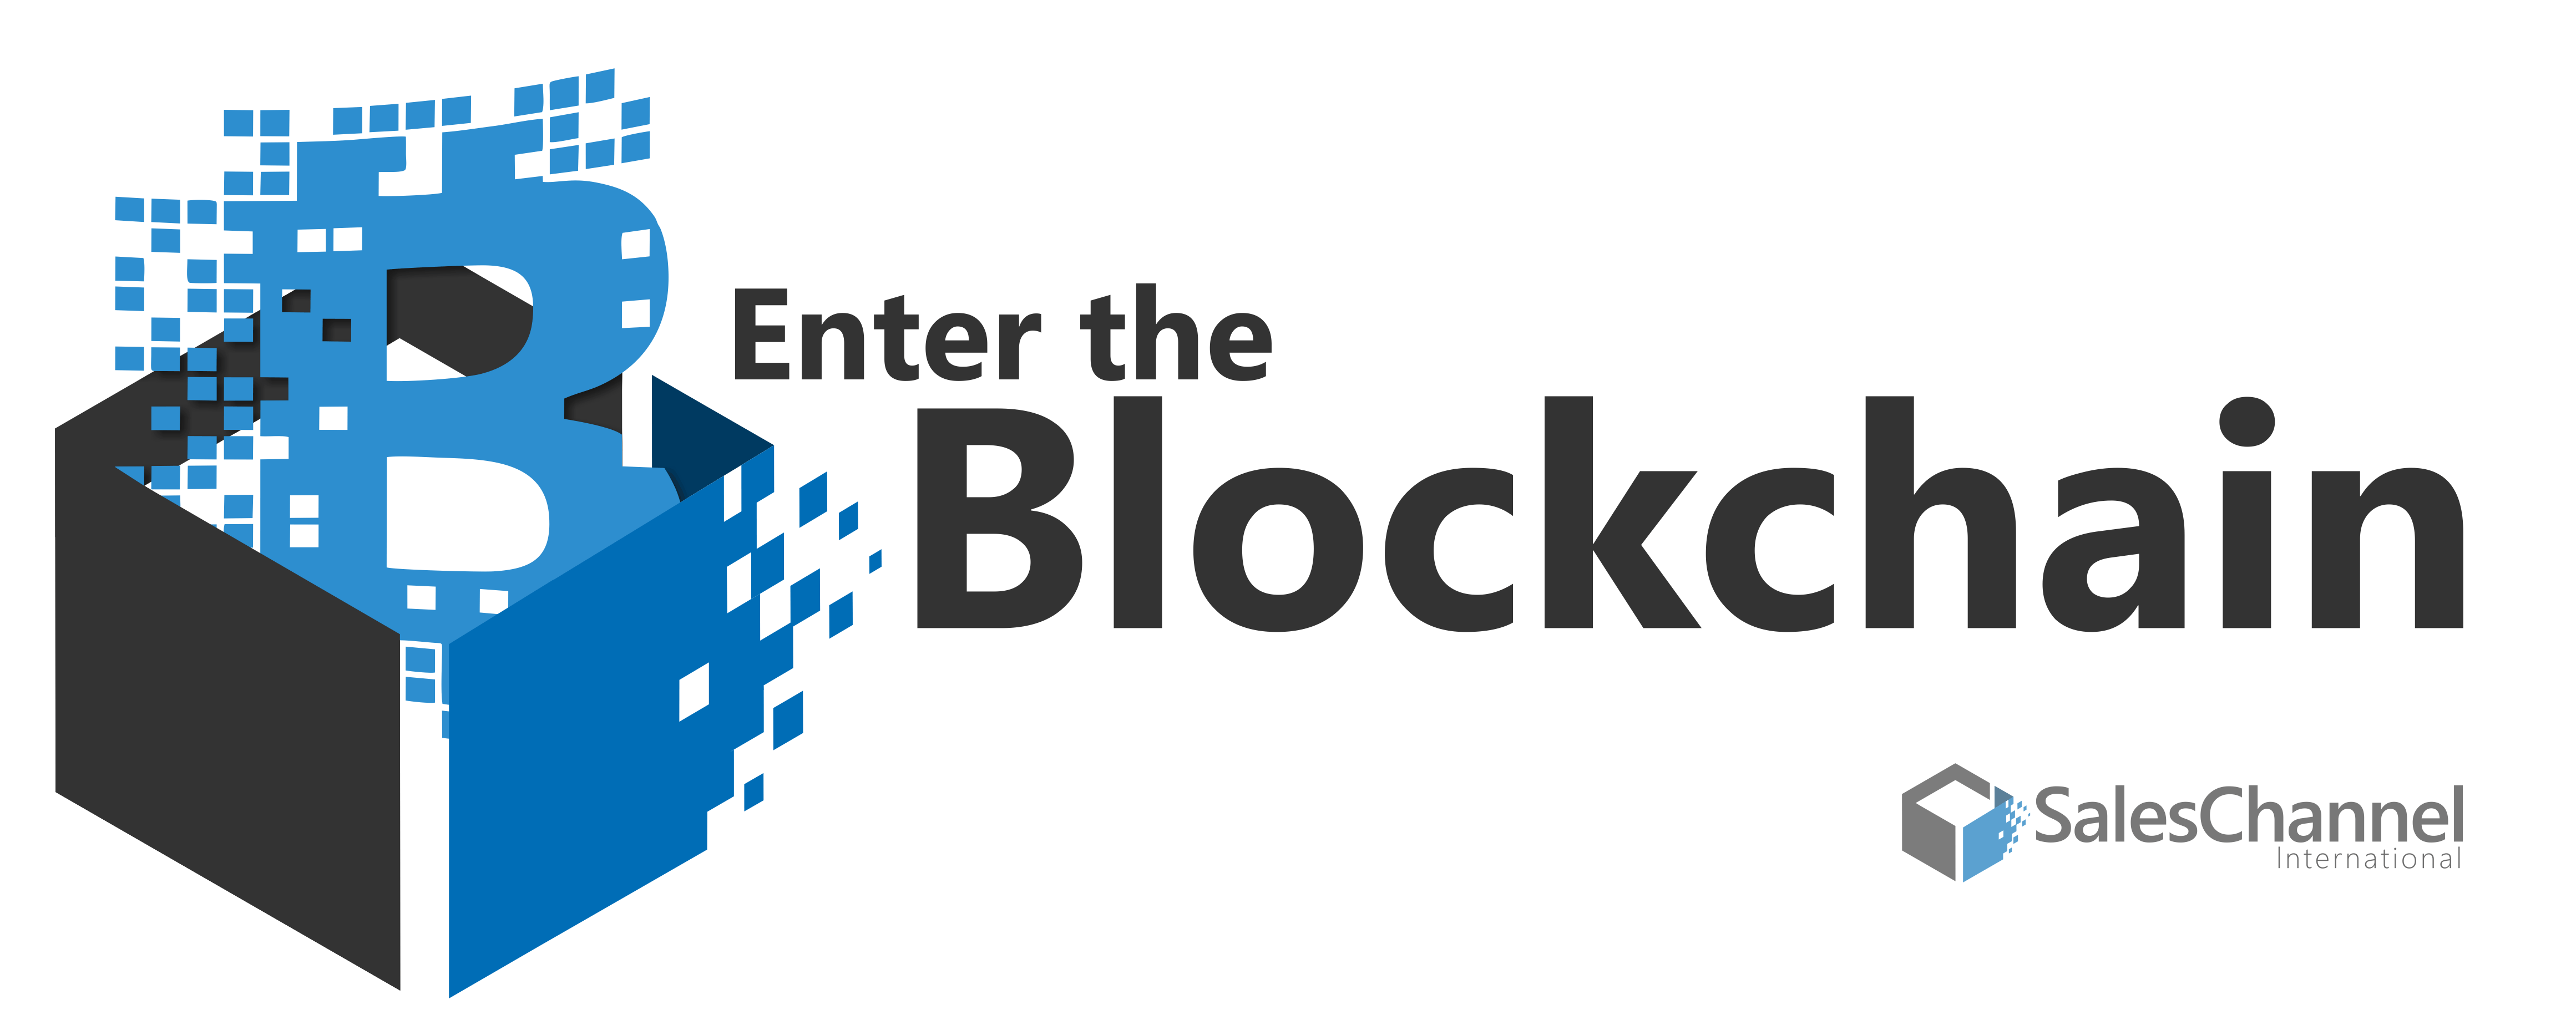 Enter the blockchain sales